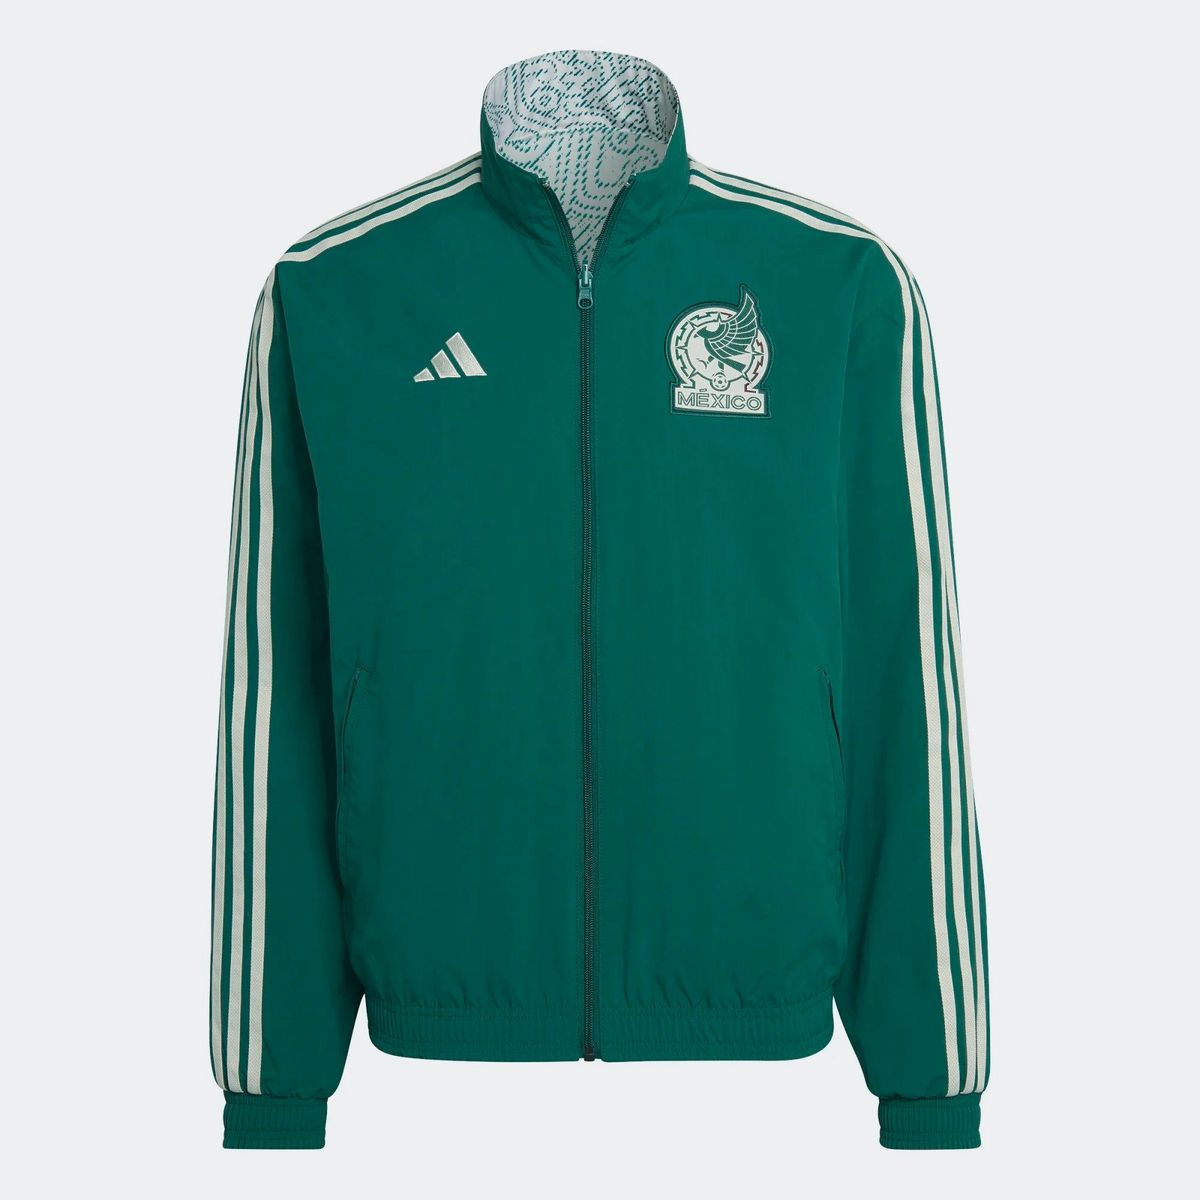 Adidas Men's Mexico Anthem Jacket (Collegiate Green/Wonder White)